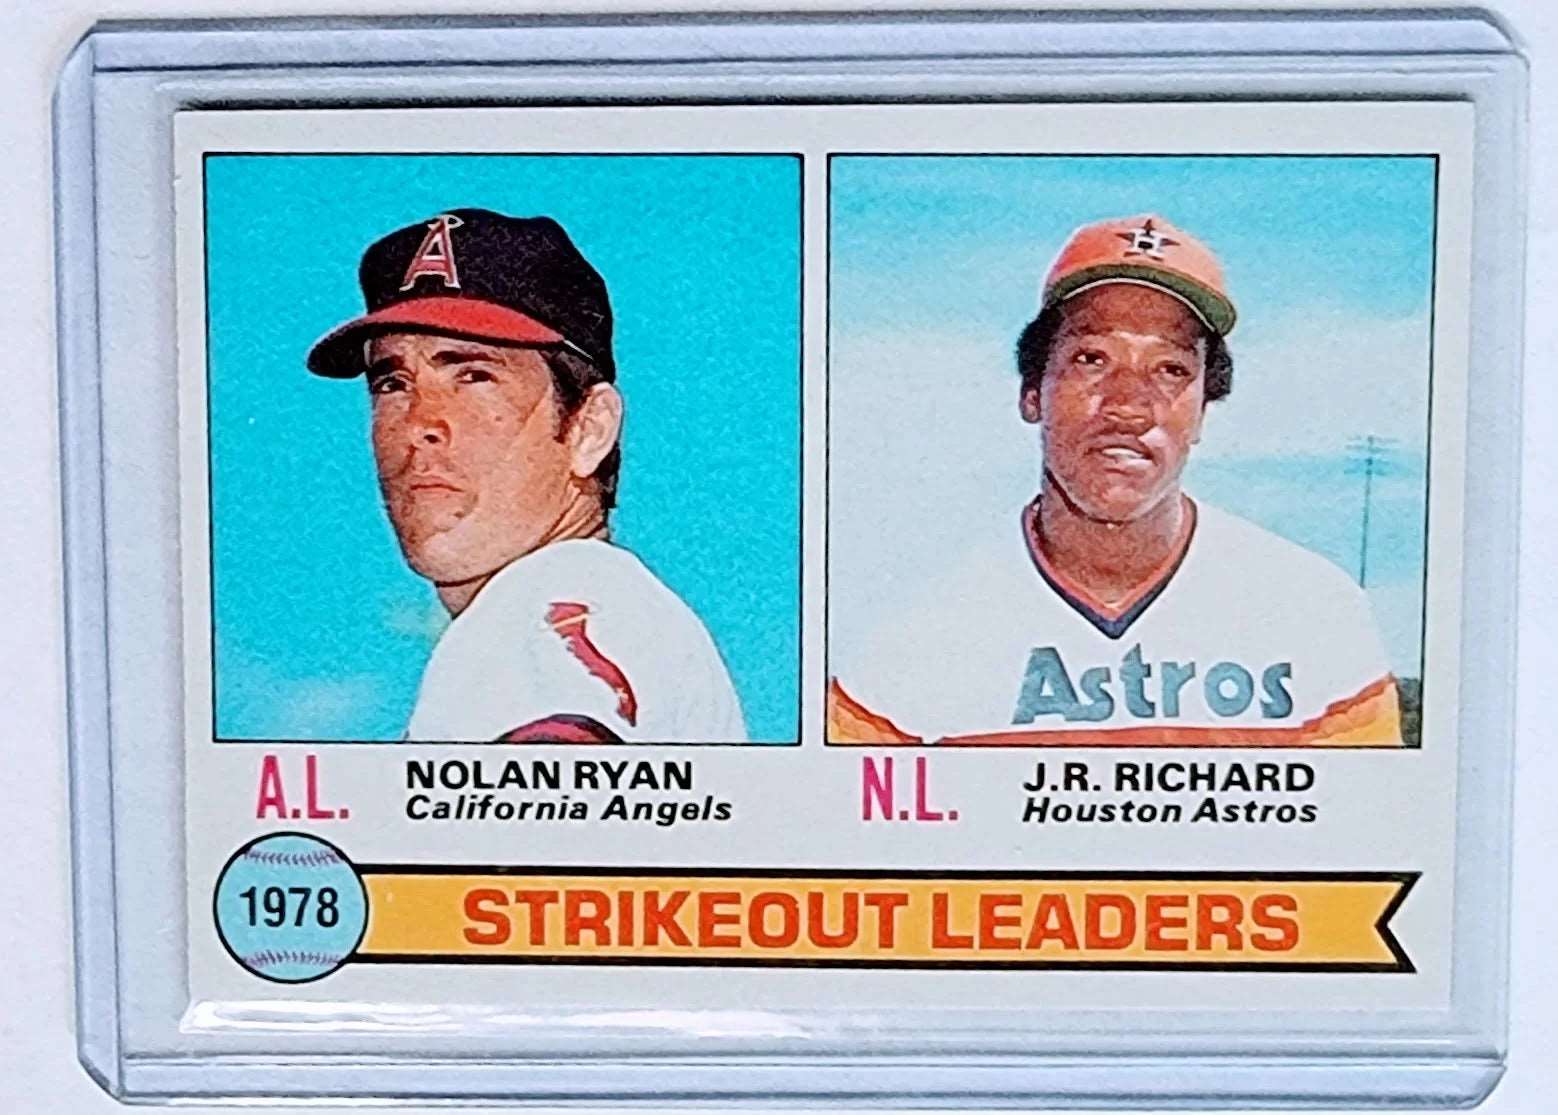 1979 Topps 1978 Strikeout Leaders Nolan Ryan & J.R. Richard NM Baseball Card TPTV simple Xclusive Collectibles, 1979 Topps Strikeout Leaders Nolan Ryan